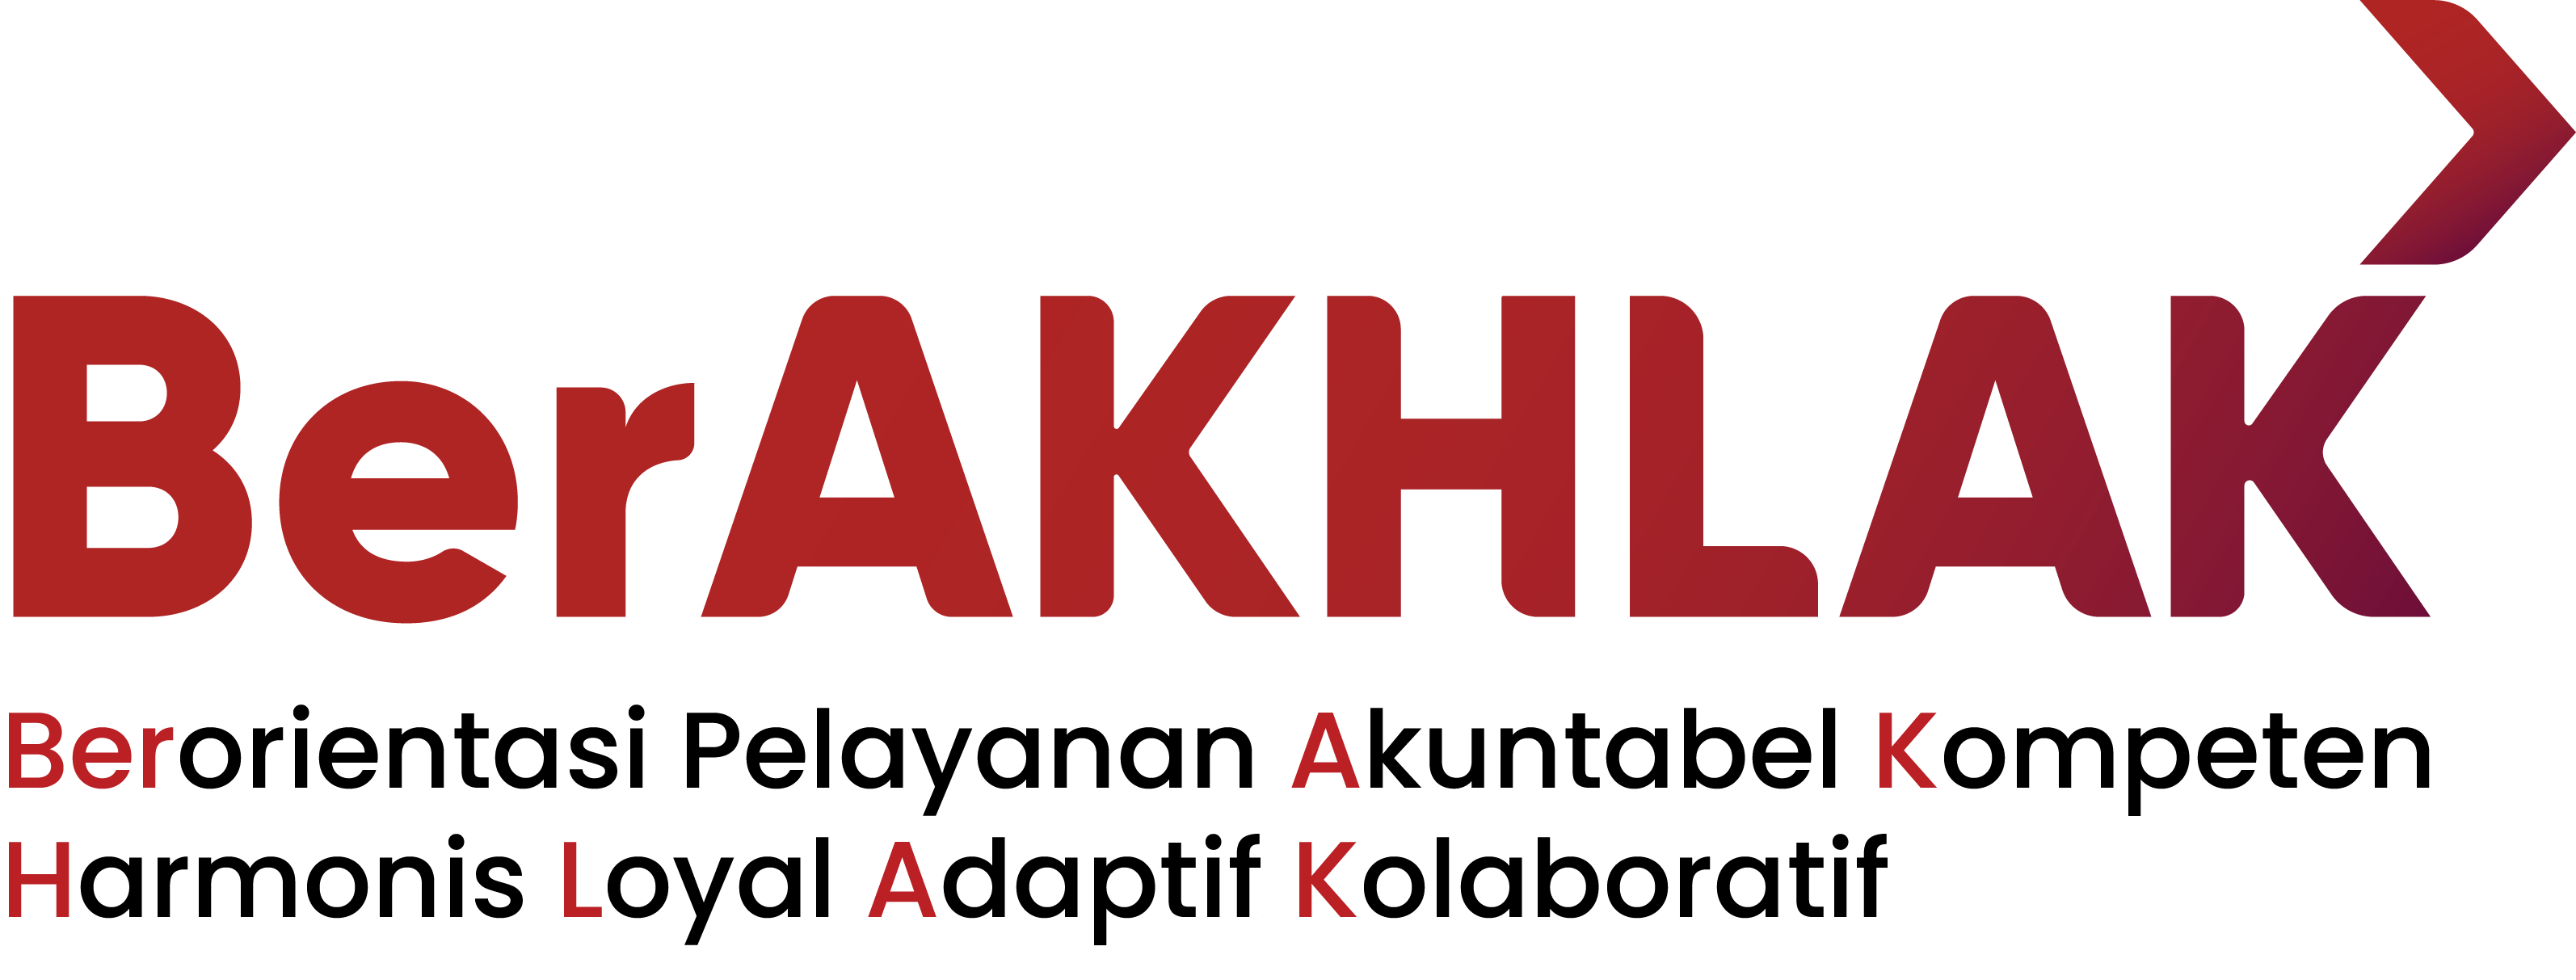 Logo_BerAKHLAK.png